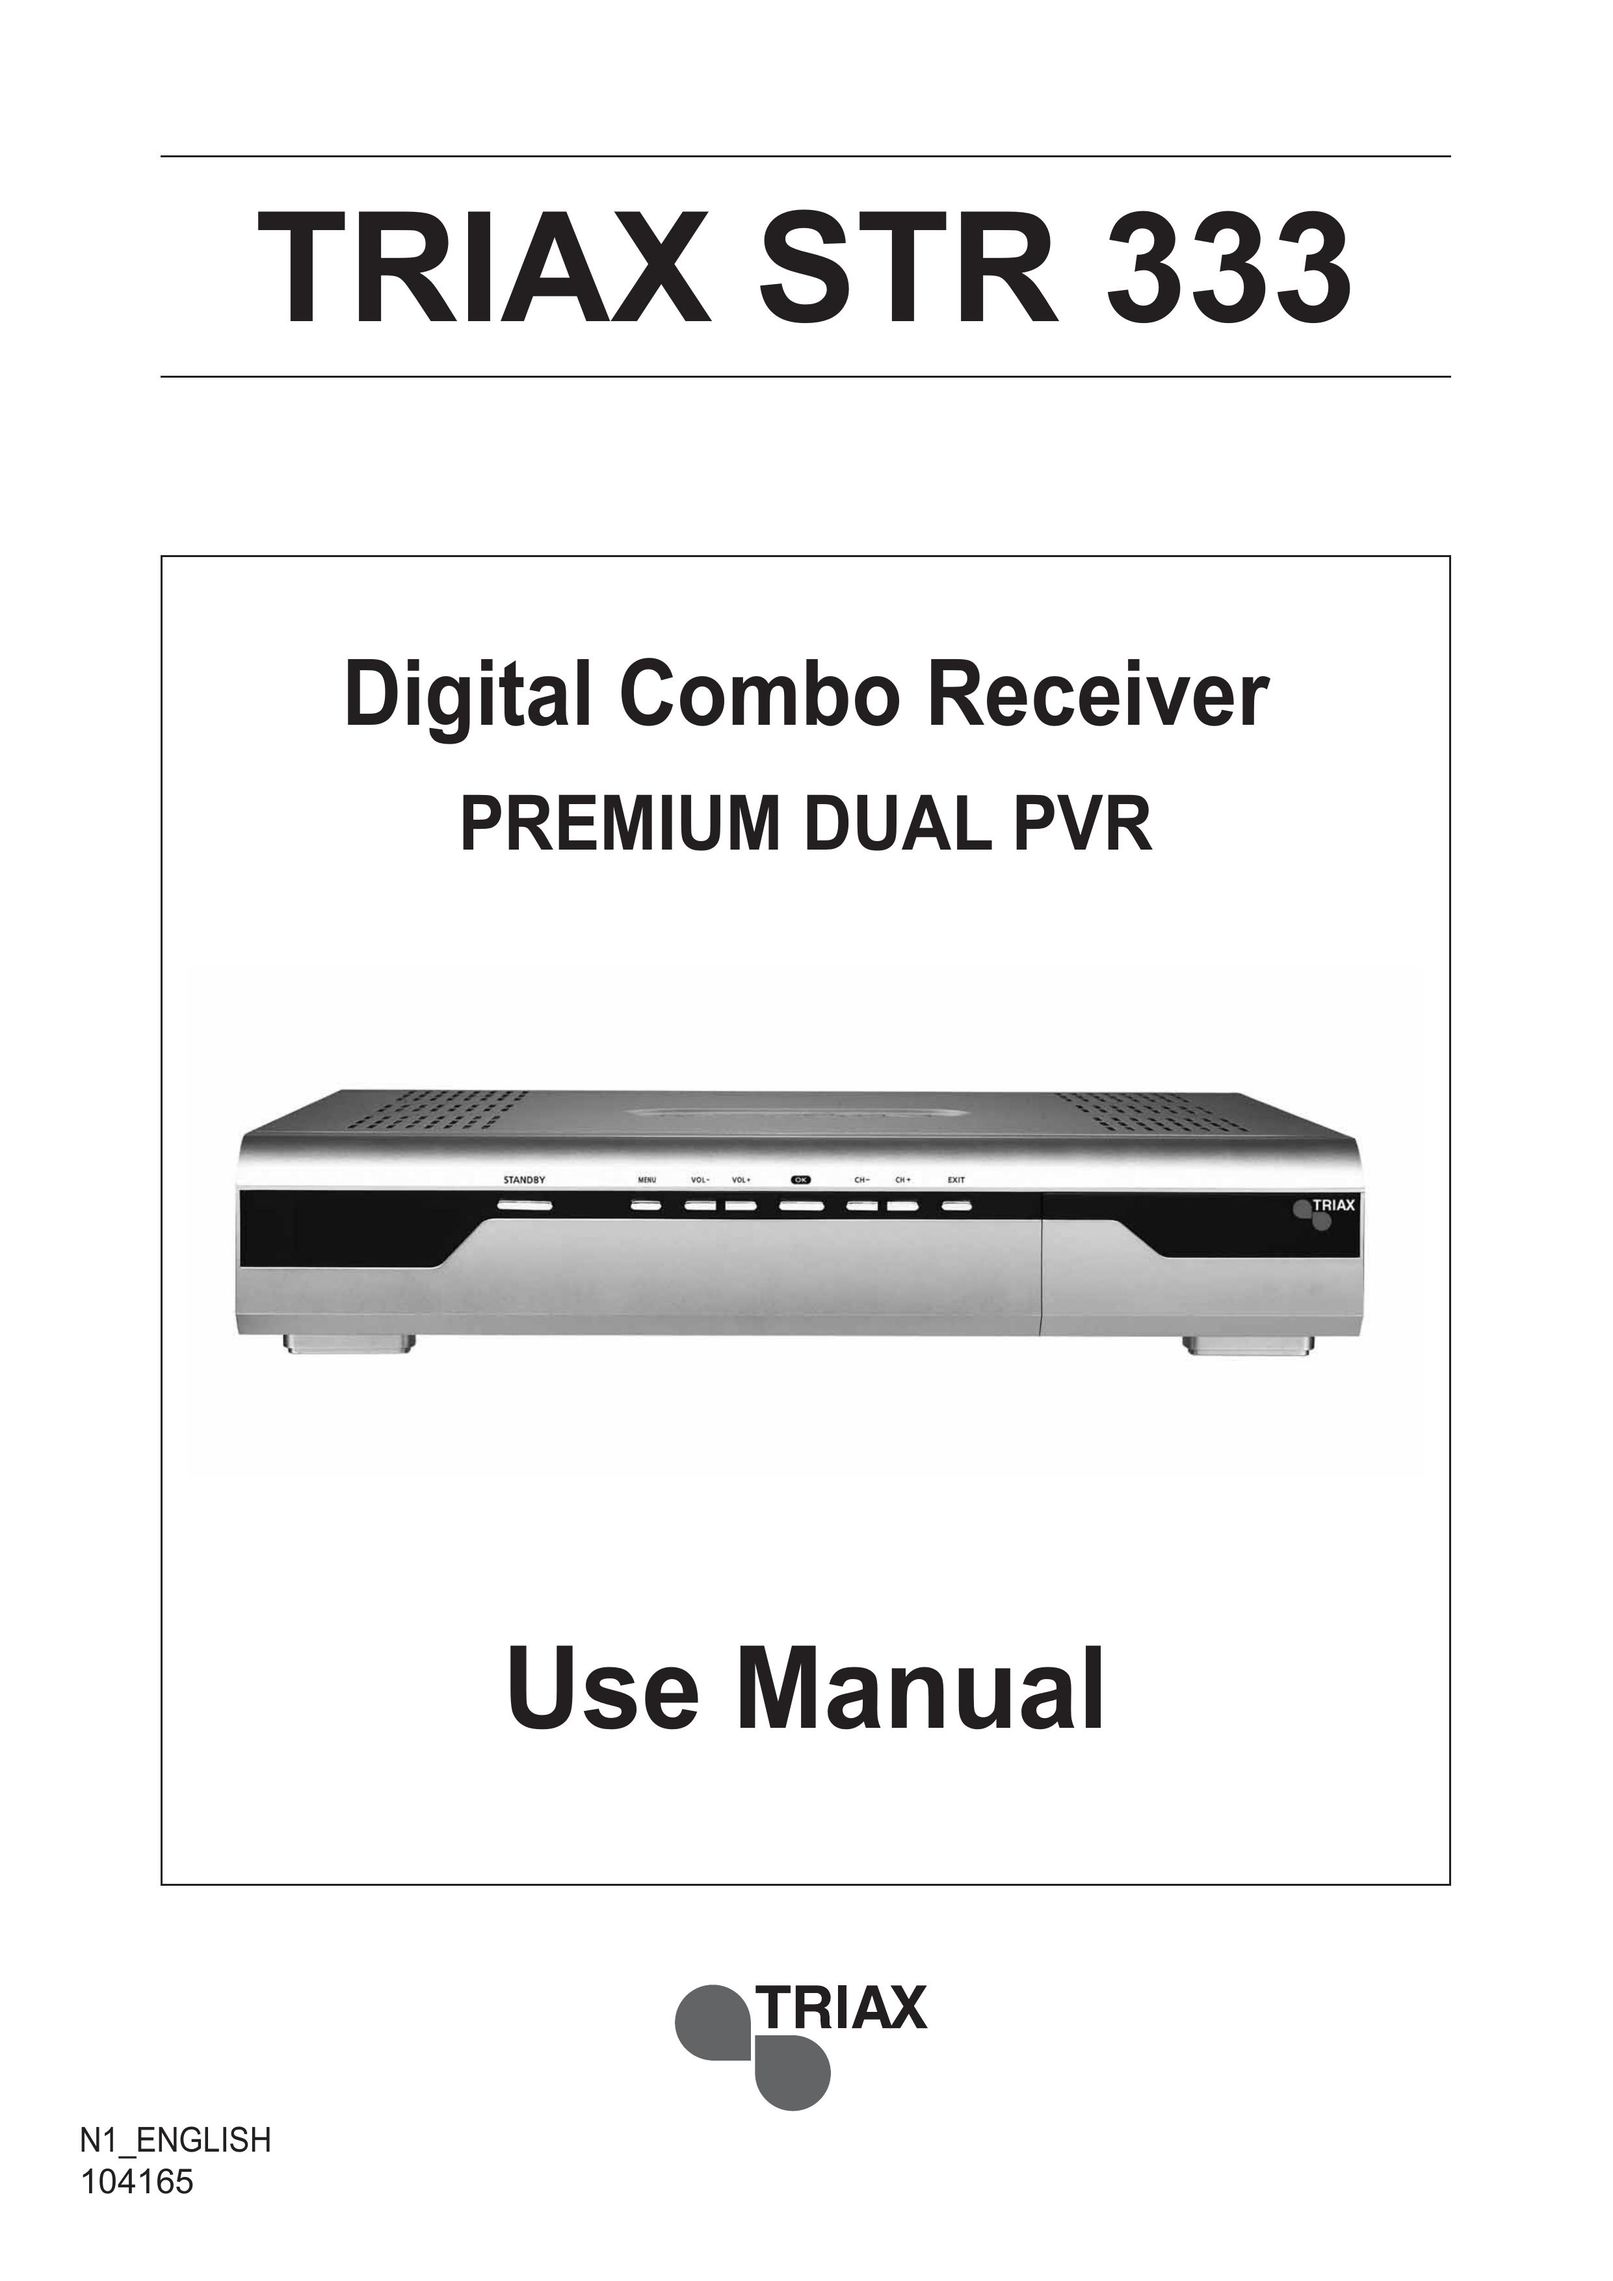 Triax STR 333 DVR User Manual